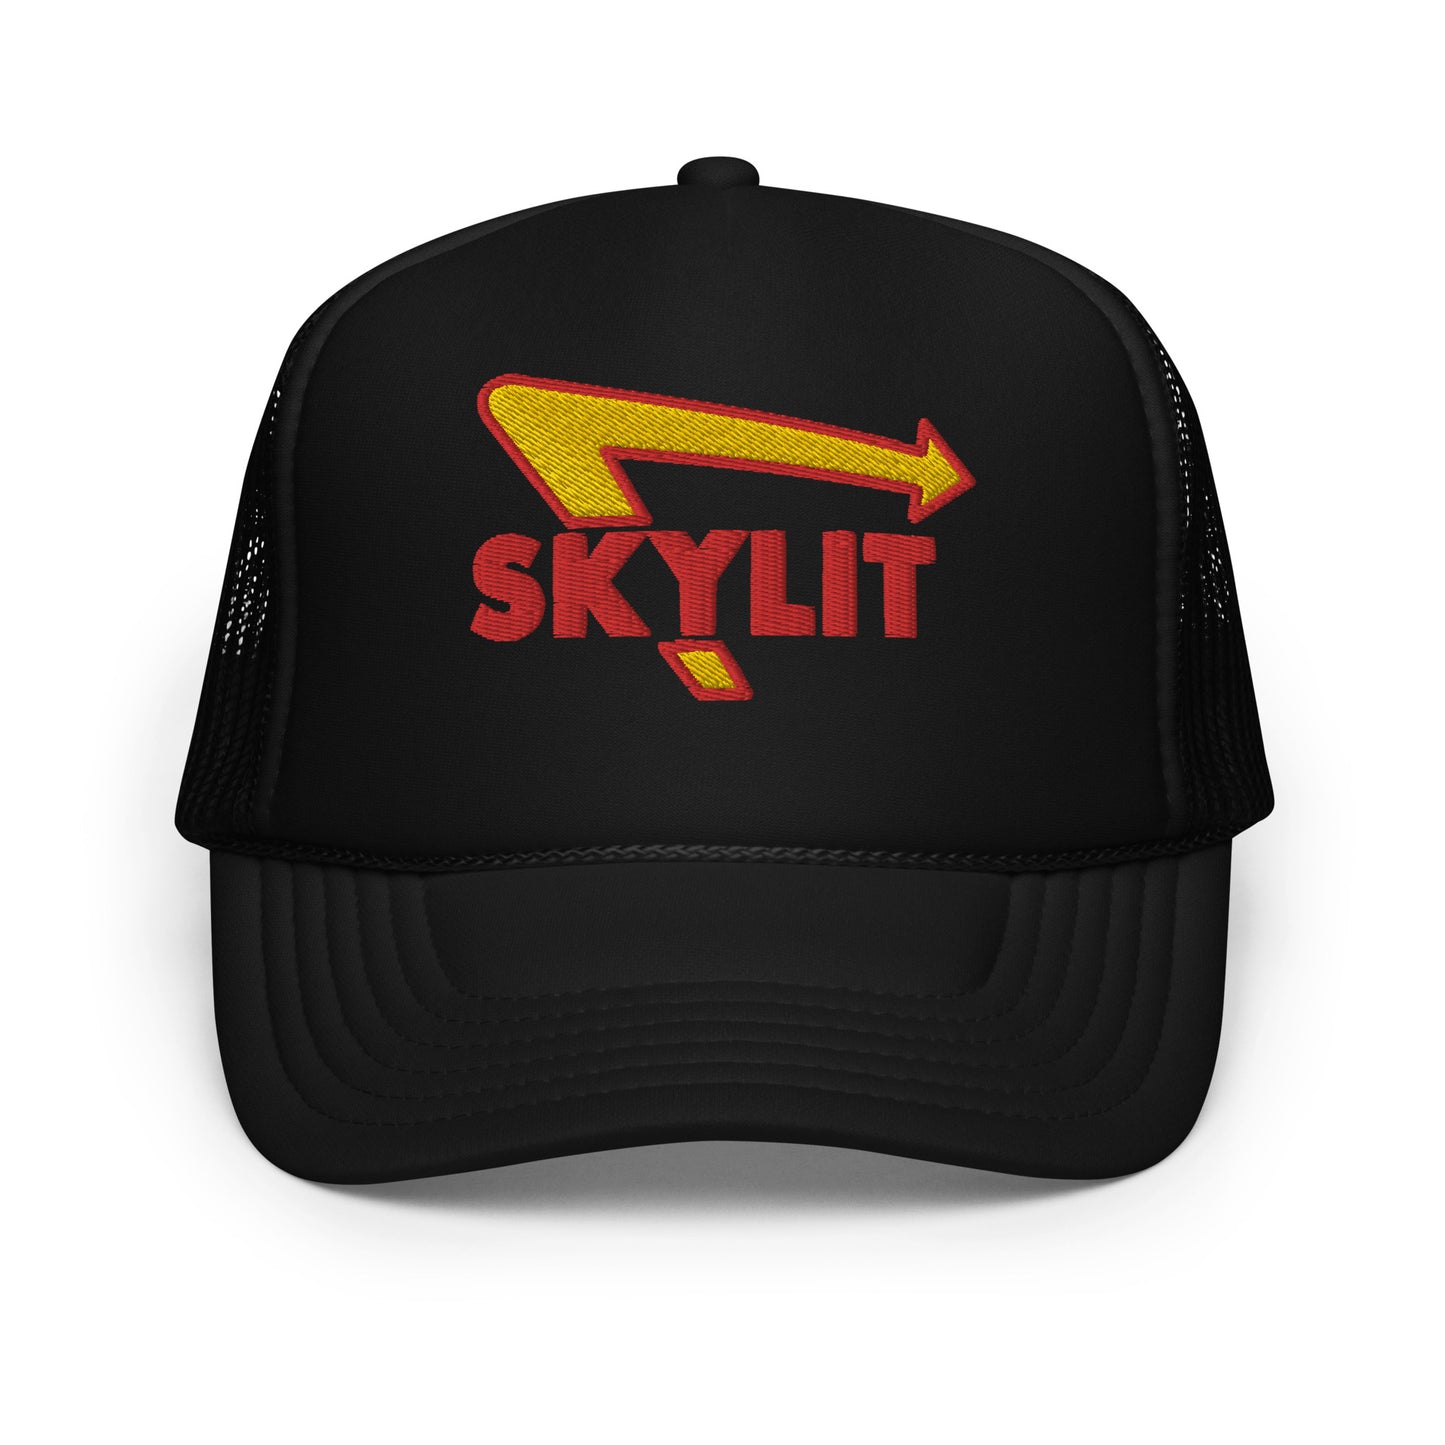 Skylit Burger Employee Hat